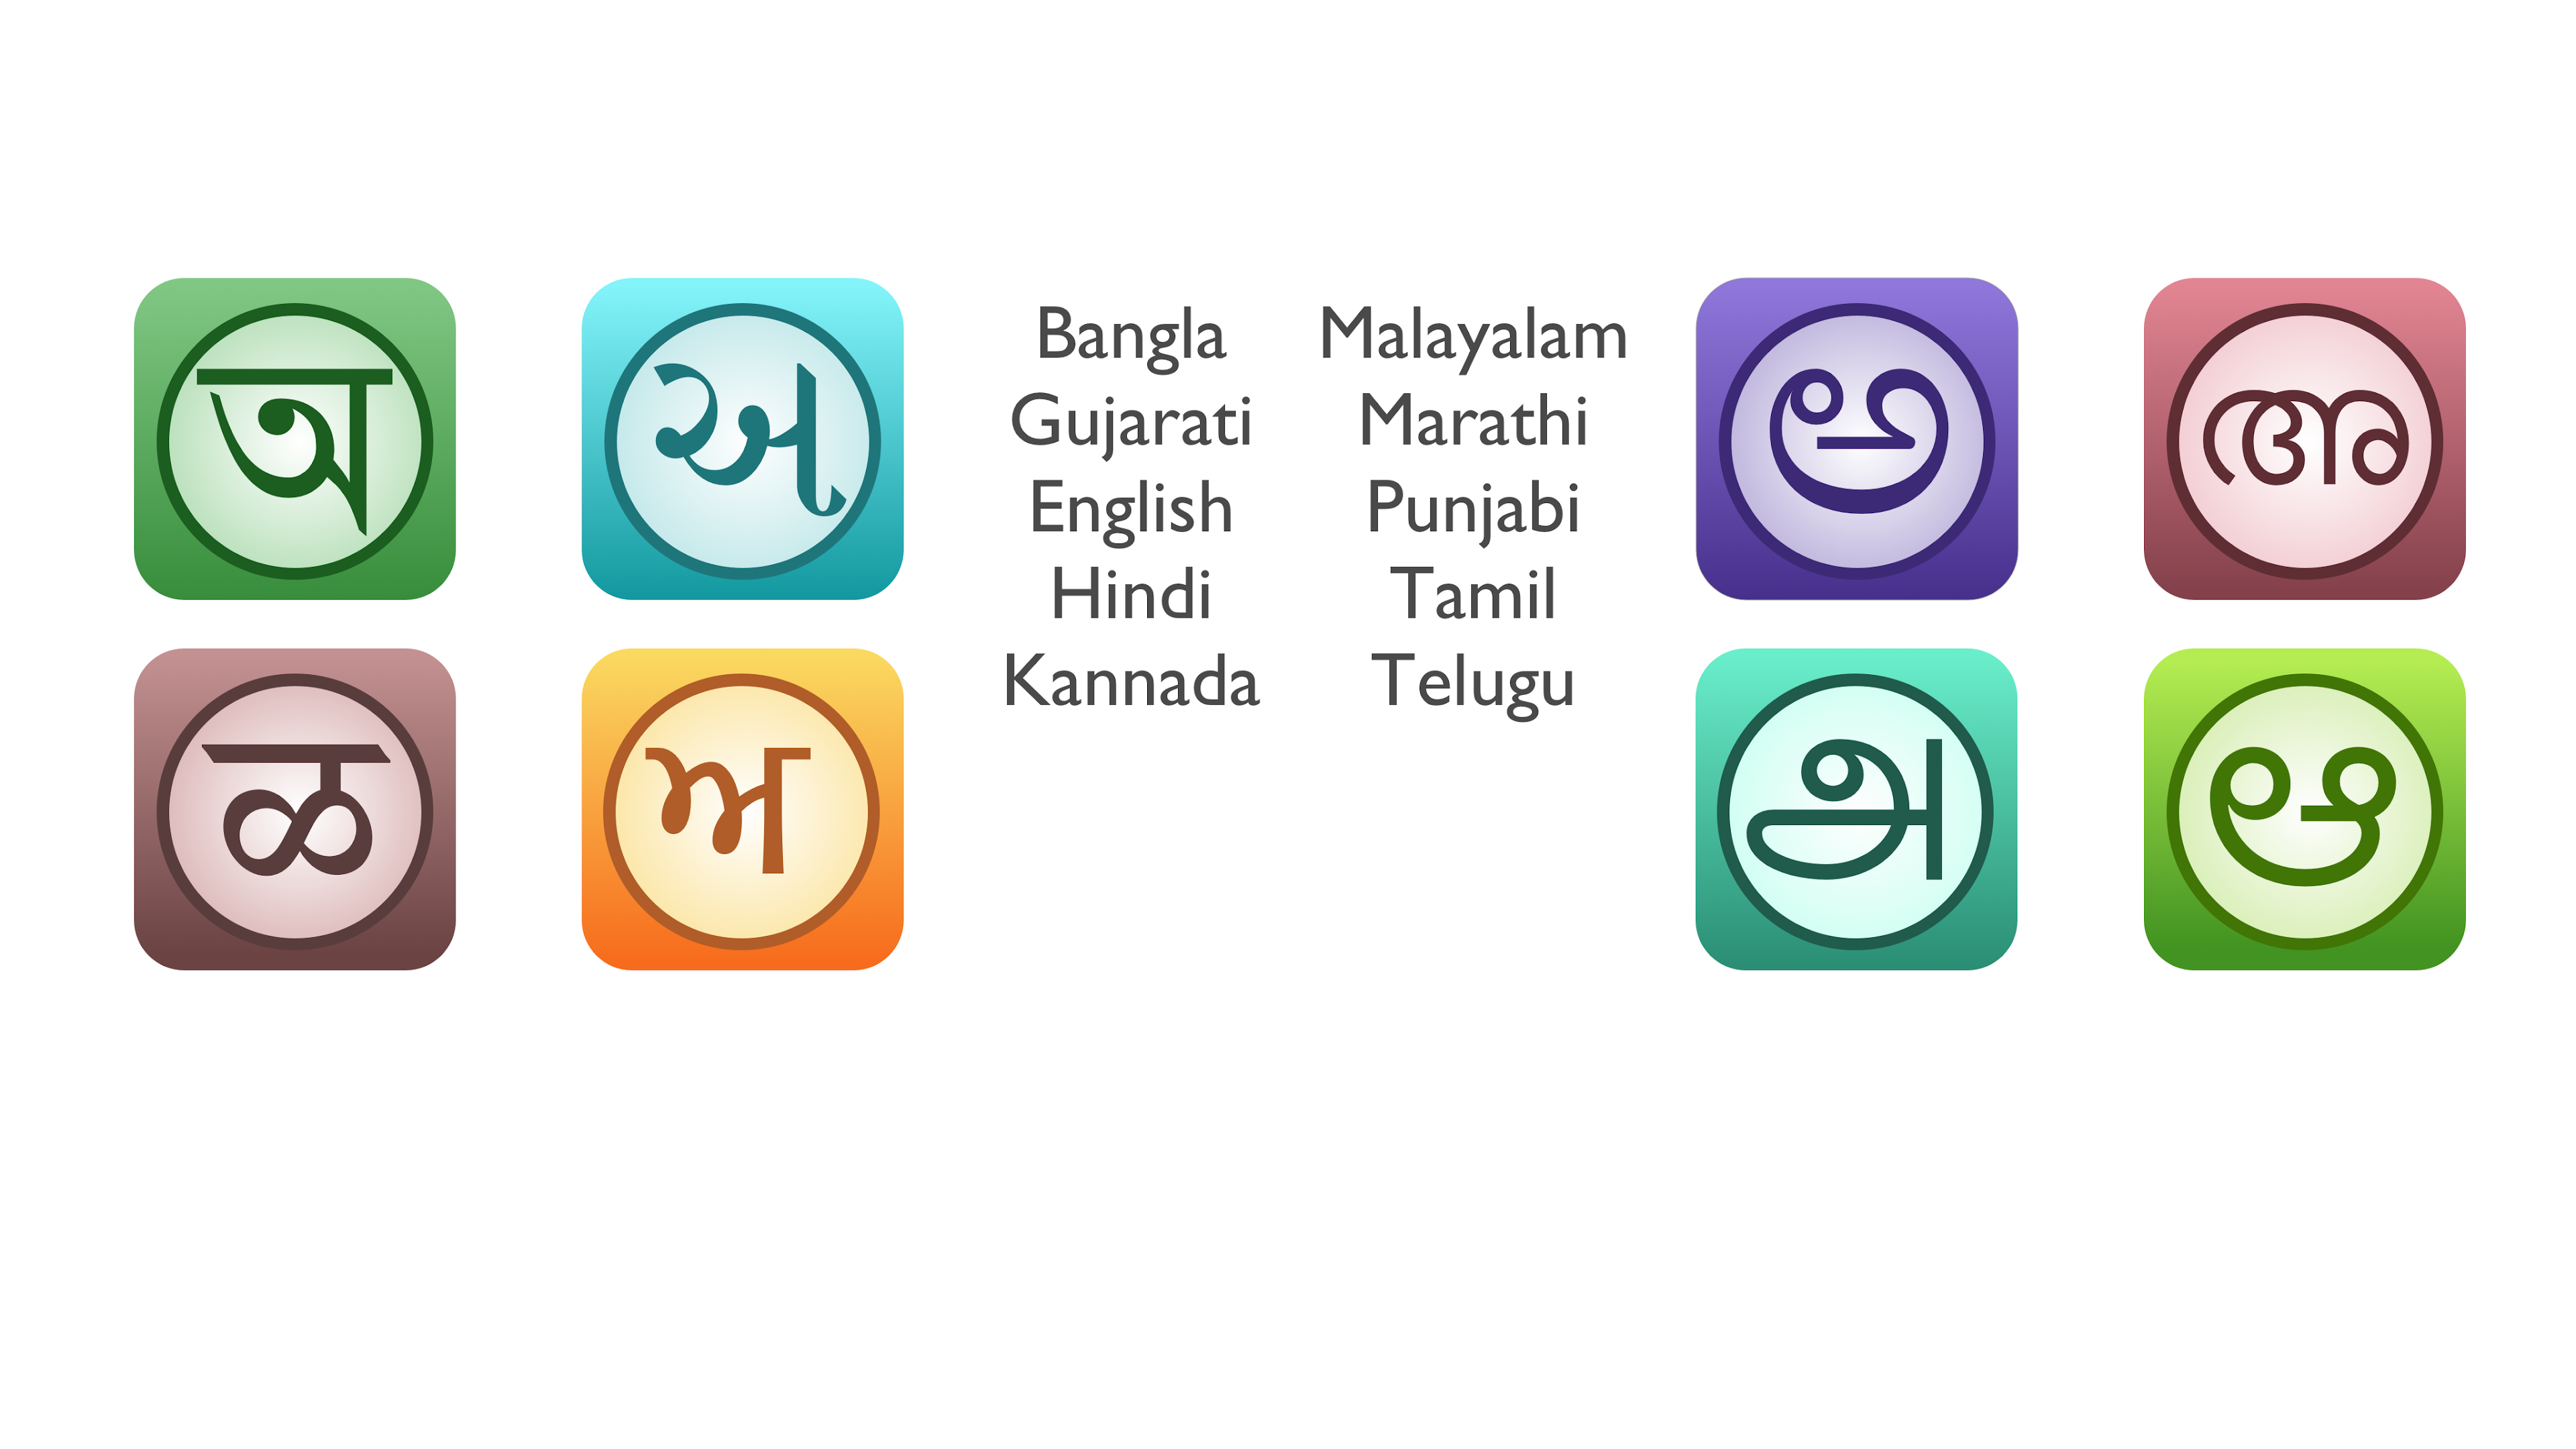 Kannada English Dictionary - Apps on Google Play